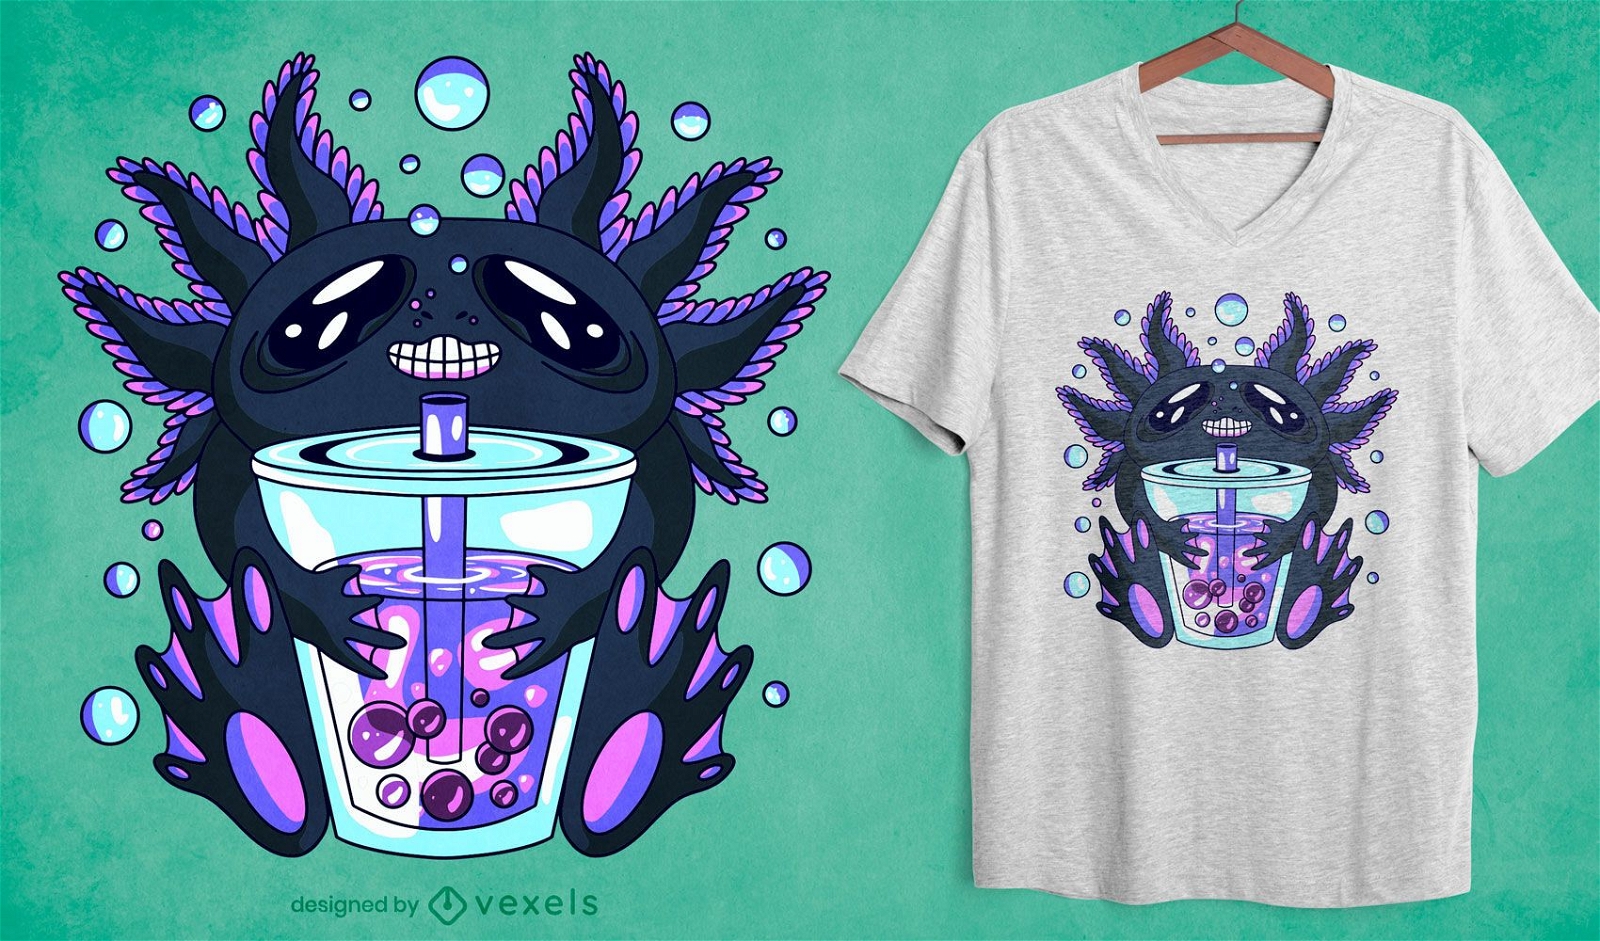 Axolotl bubble tea t-shirt design